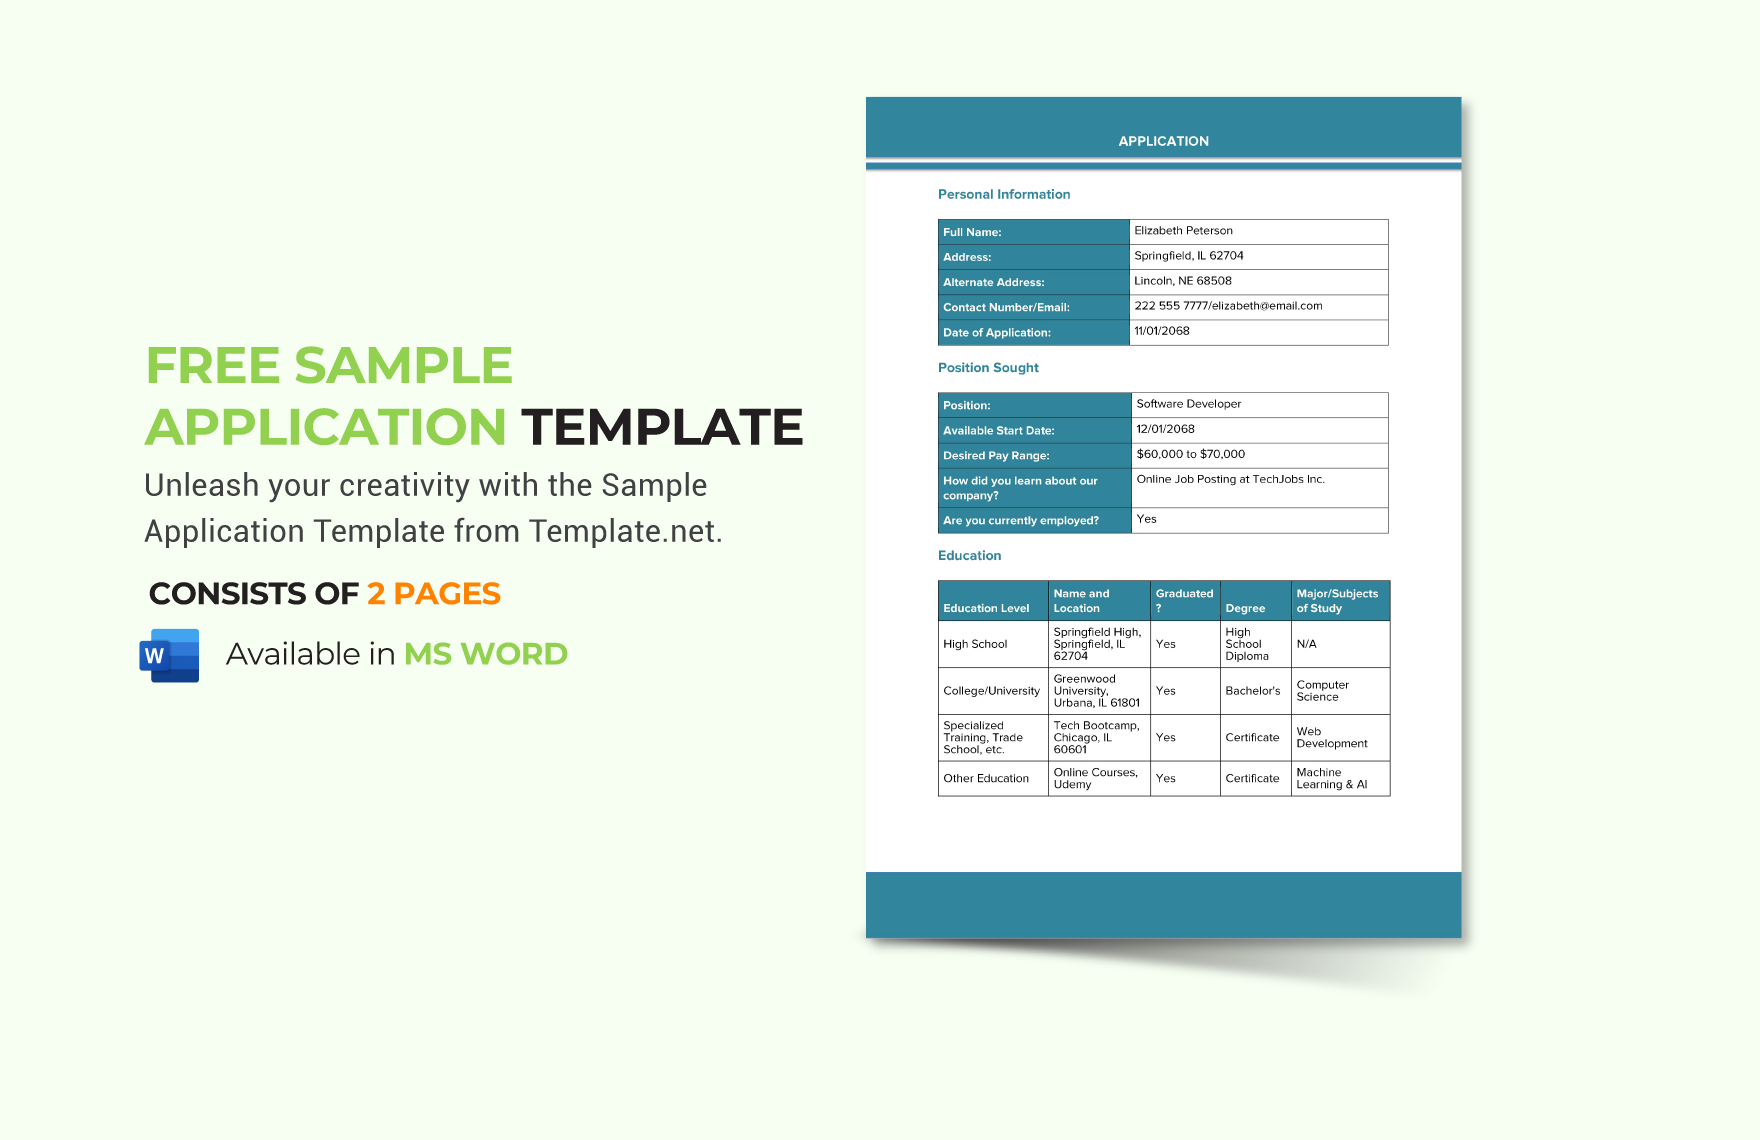 Sample Application Template